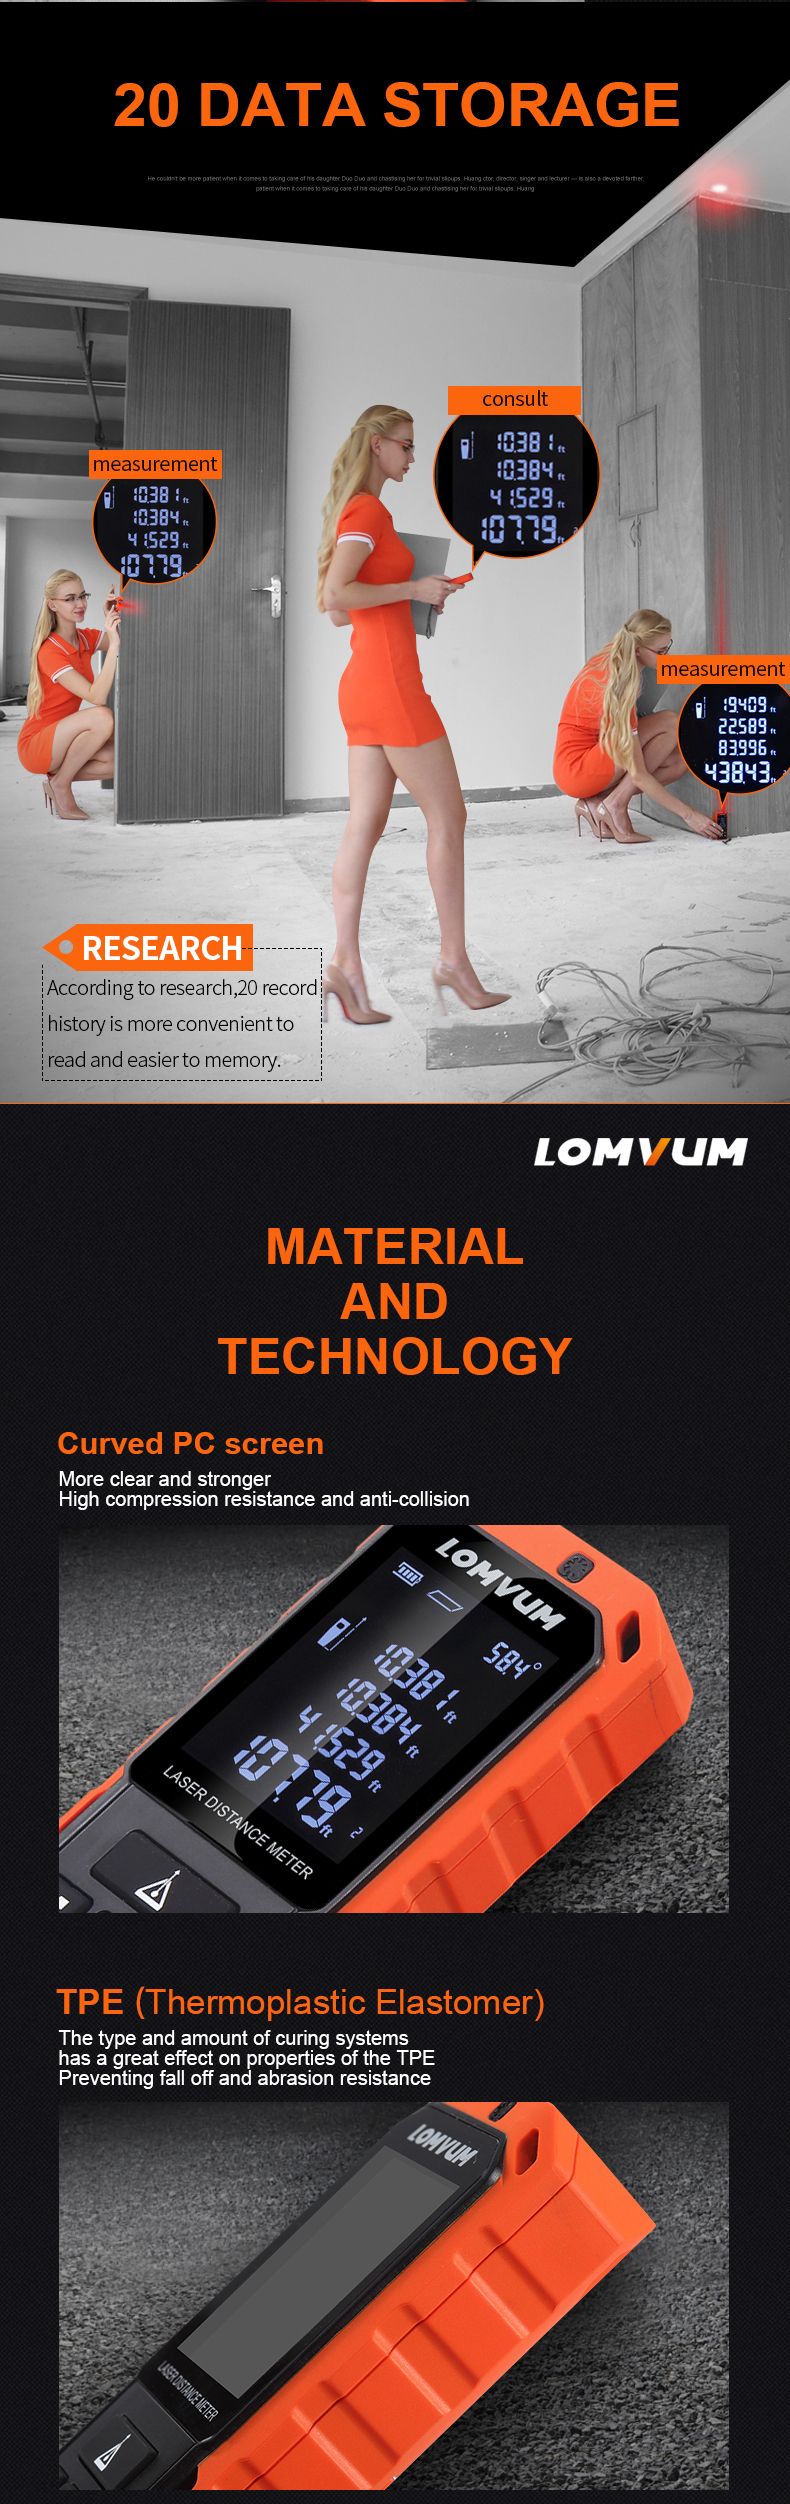 LOMVUM-40M-LD-Laser-Rangefinders-Digital-Rechargeable-Battery-Auto-Level-Laser-Distance-Meter-Measur-1370498